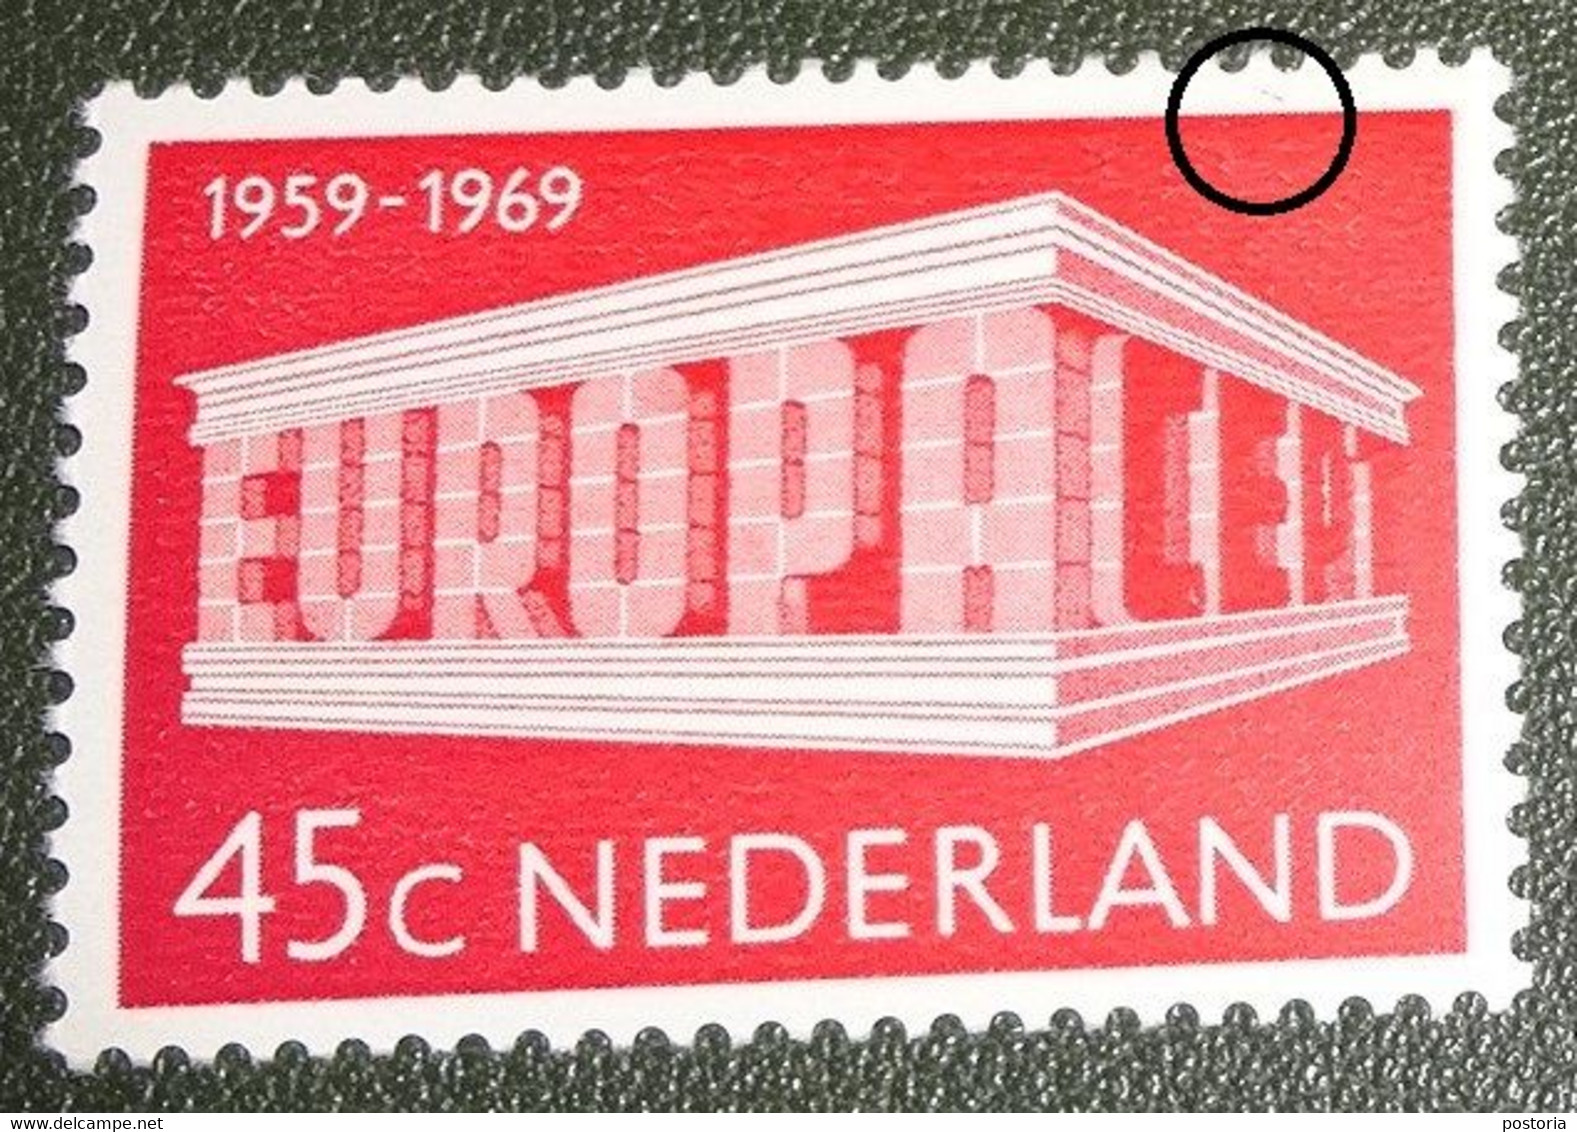 Nederland - MAST - 926 PM1 - 1969 - Plaatfout - Postfris - Diagonaal Krasje In Zegelrand - Plaatfouten En Curiosa